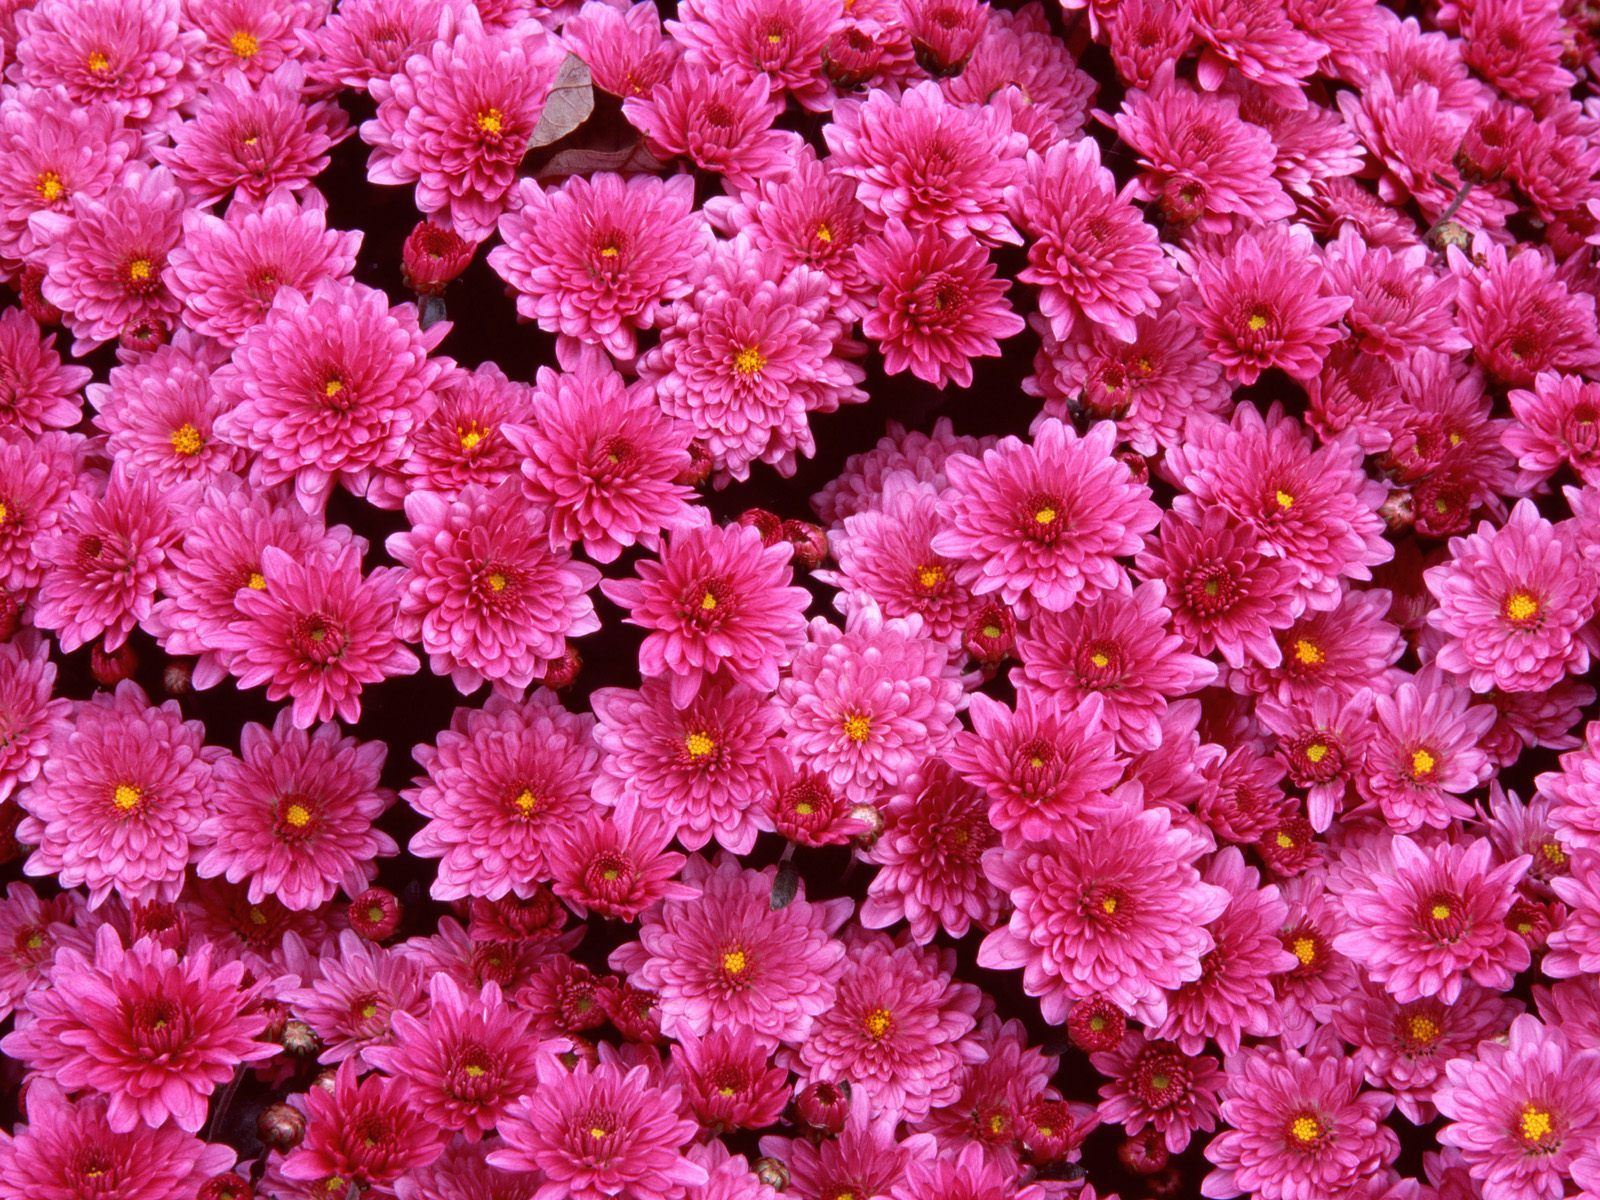 everett piccolo: Macro flower wallpaper